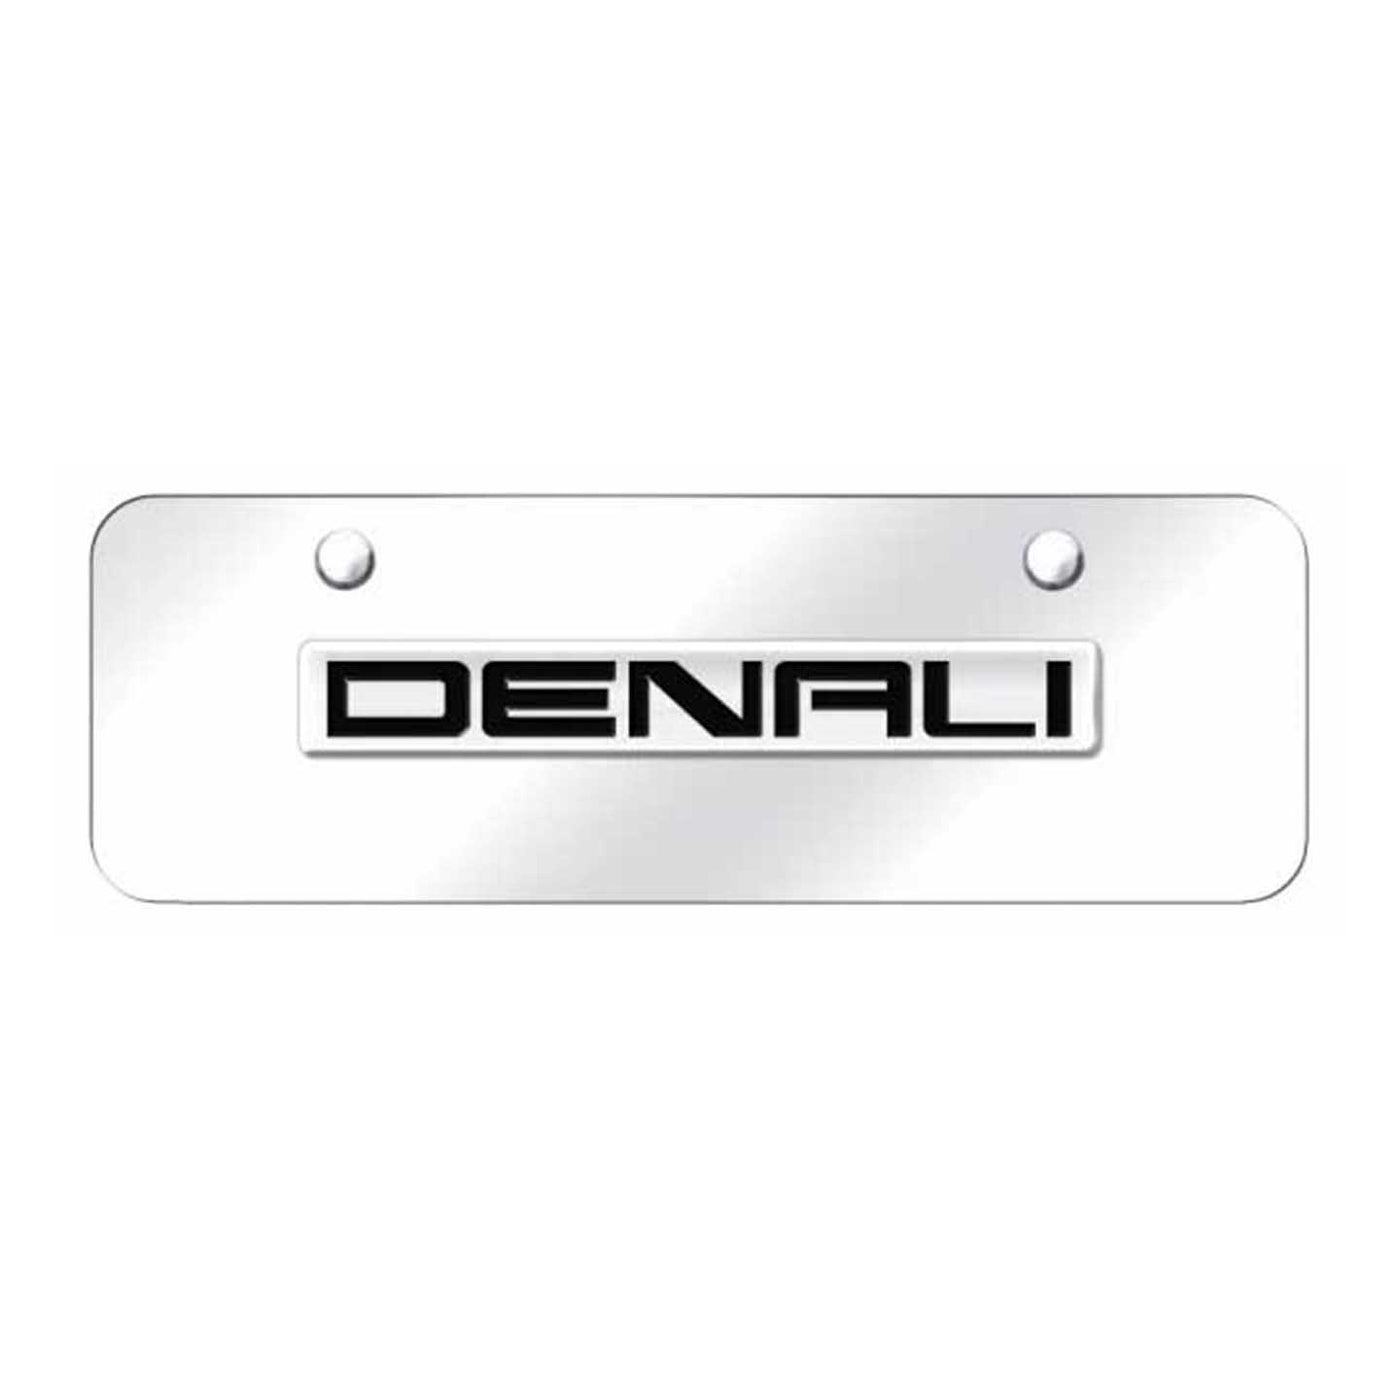 Denali Name Mini Plate - Chrome on Mirrored